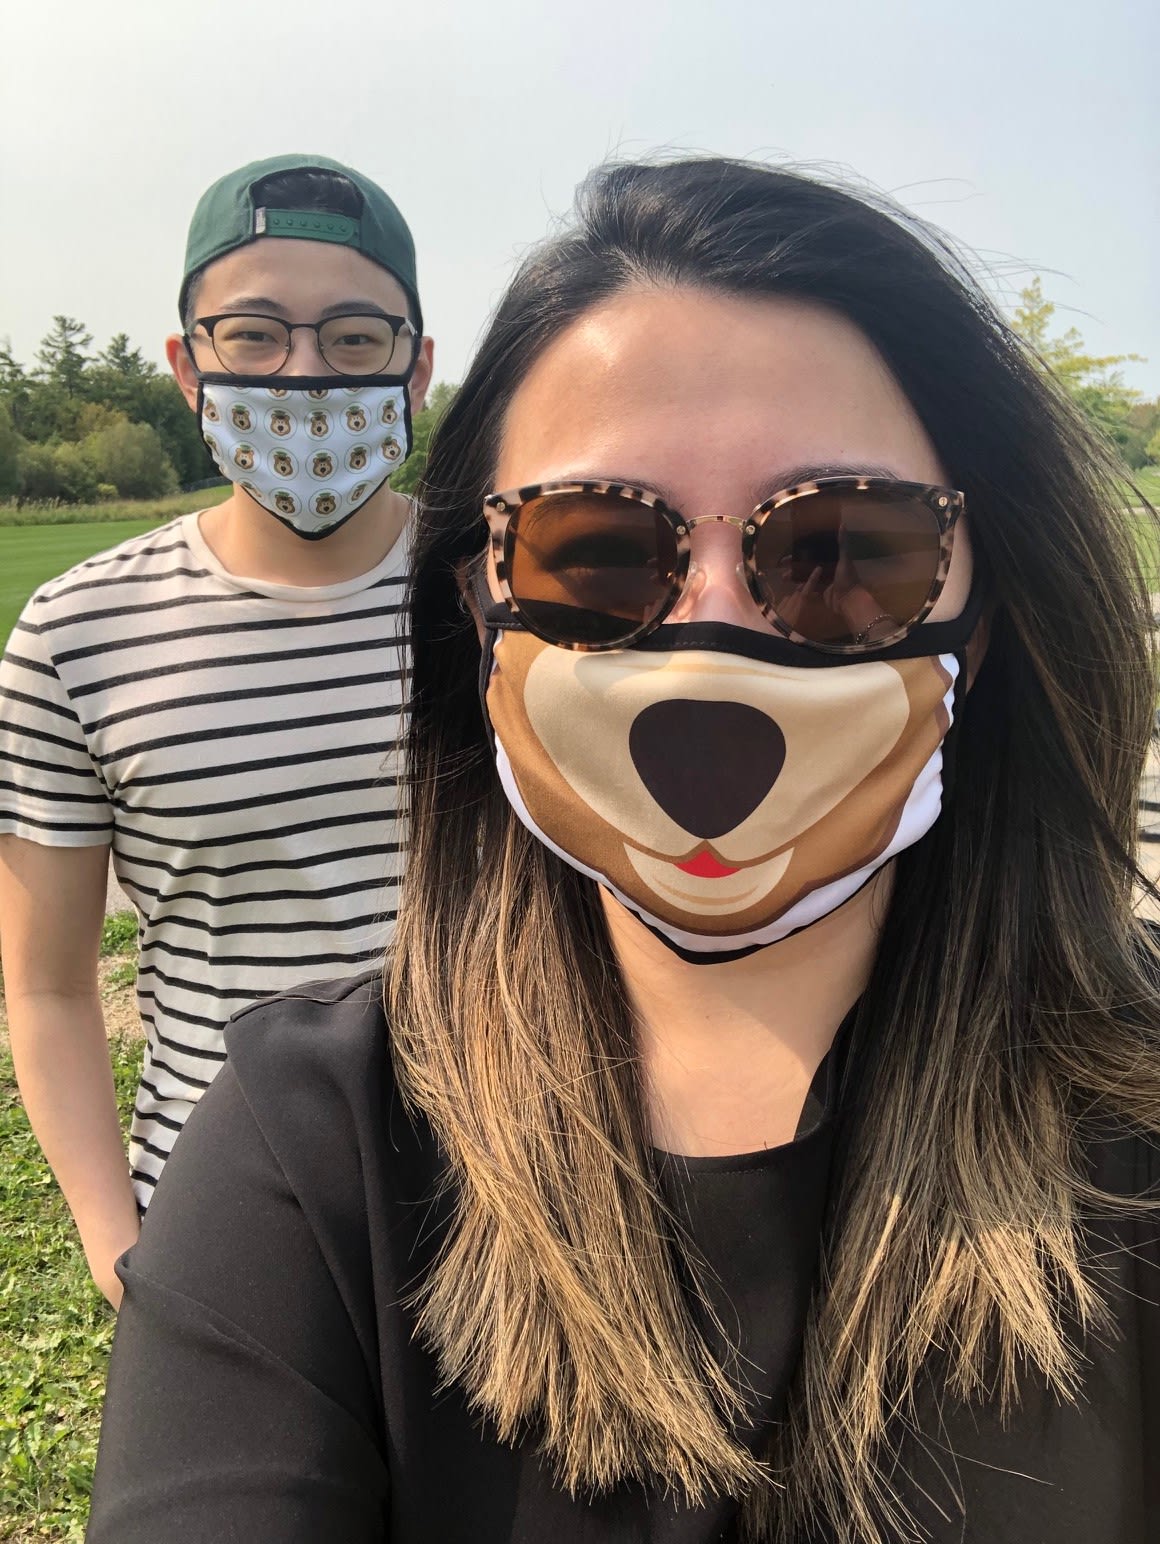 Two people wear face masks